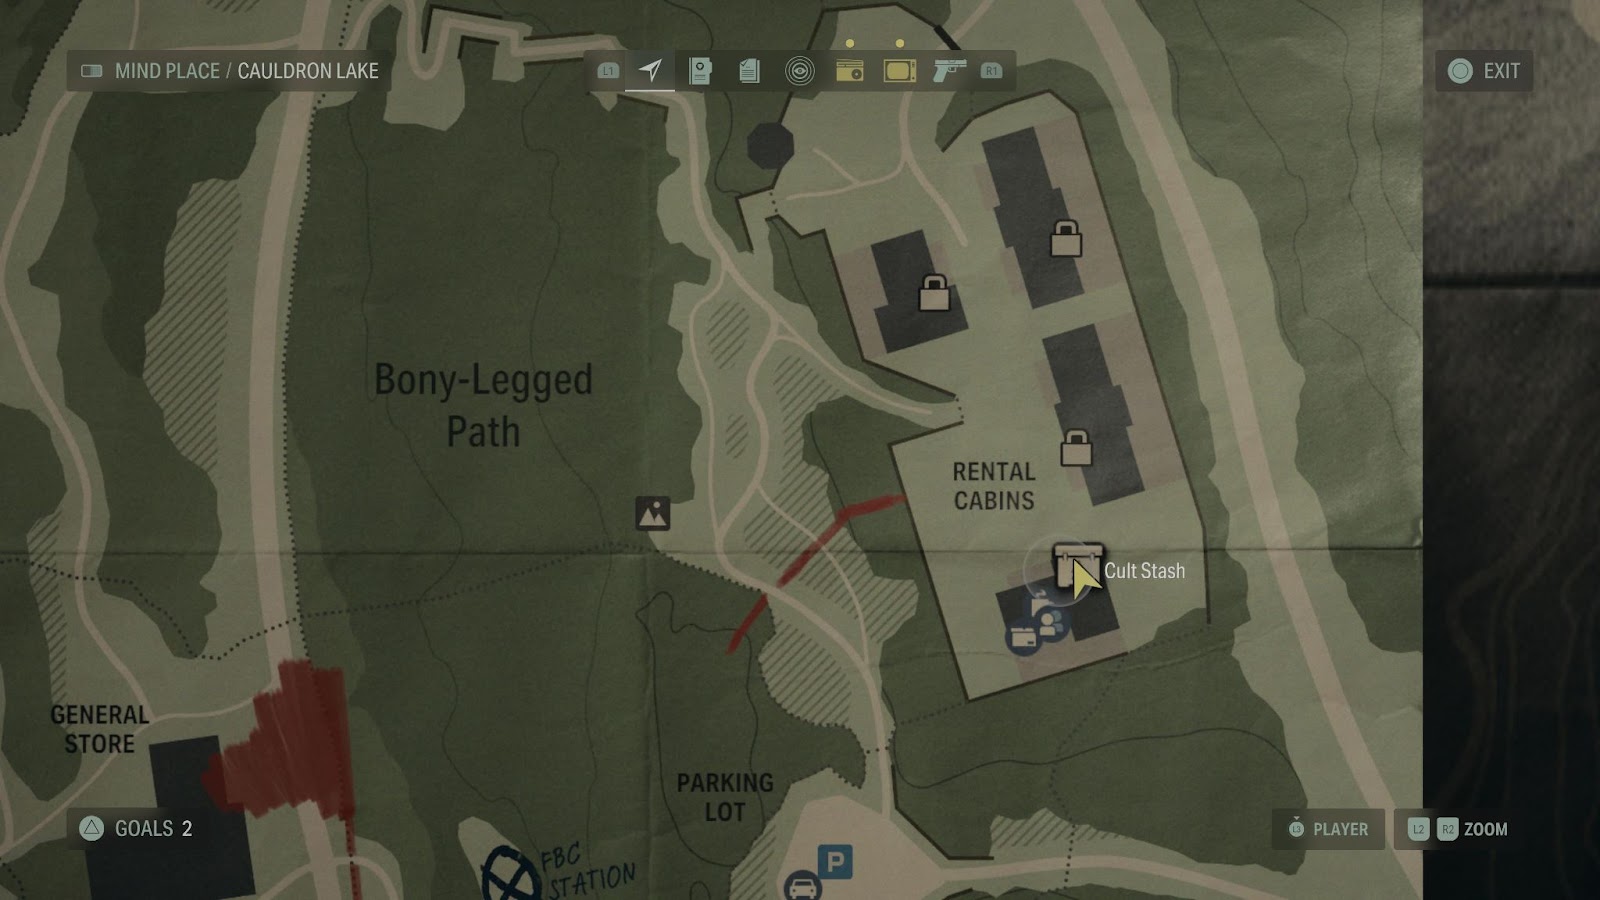 An in game screenshot of the rental cabins area in Cauldron Lake from Alan Wake 2